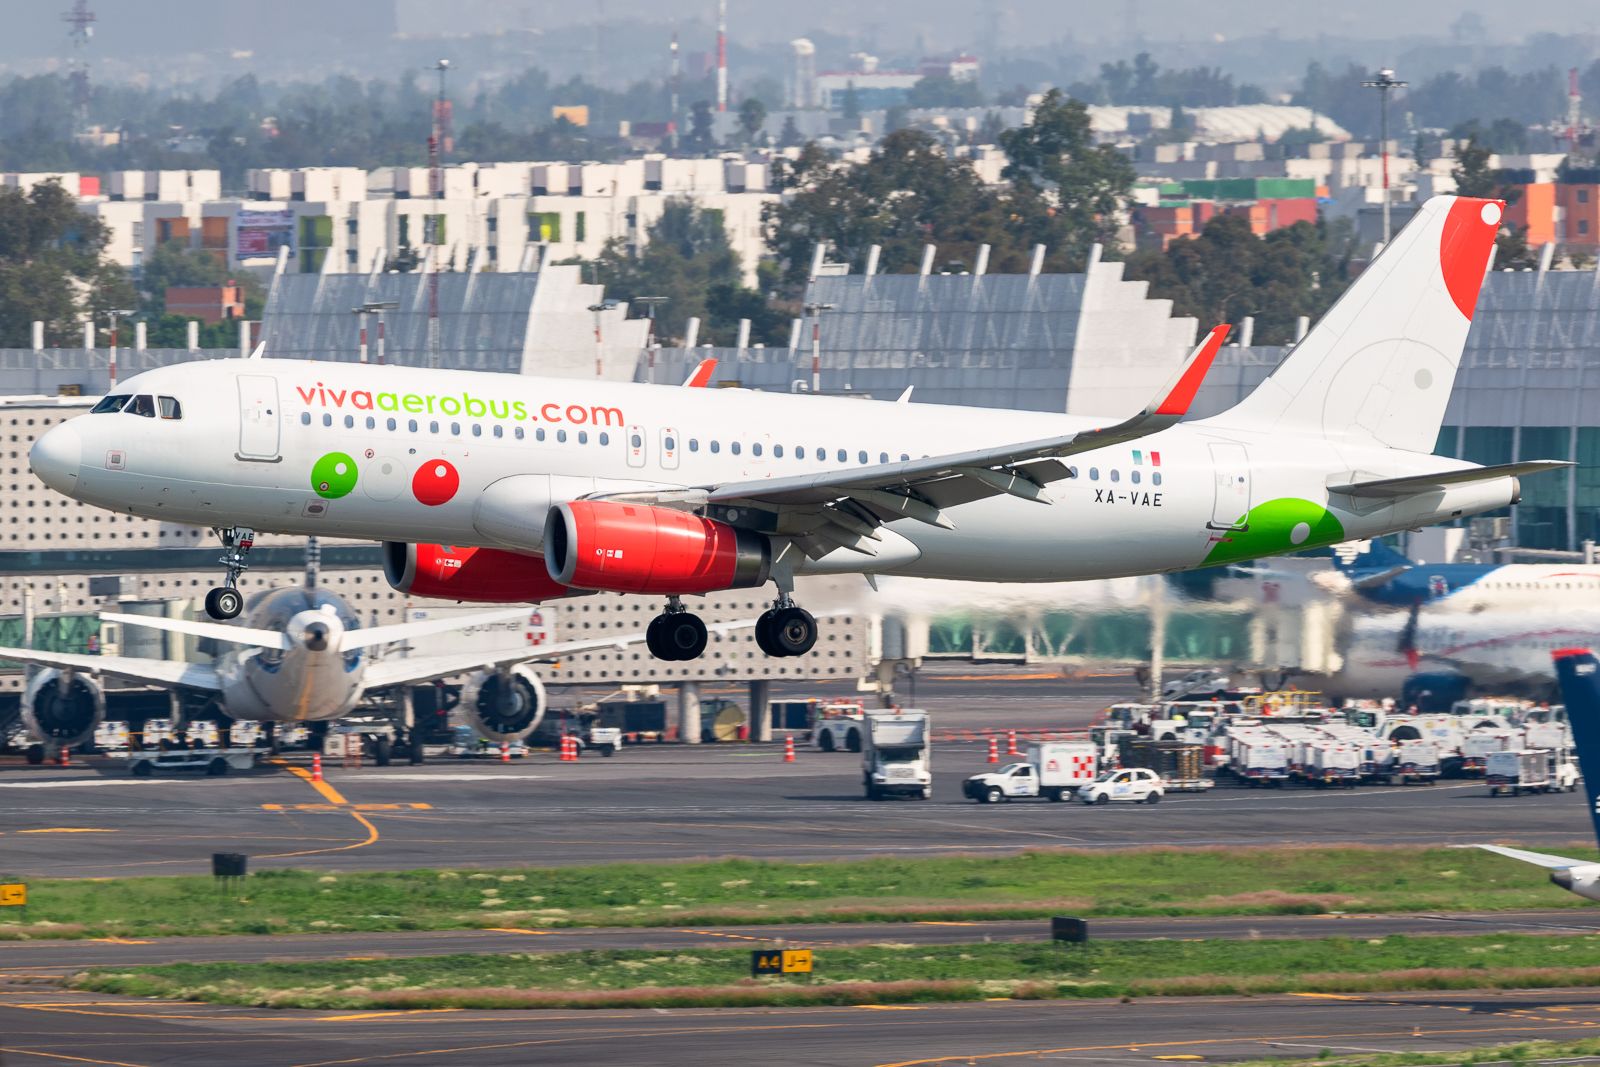 A Viva Aerobus Airbus A320 landing at Mexico City